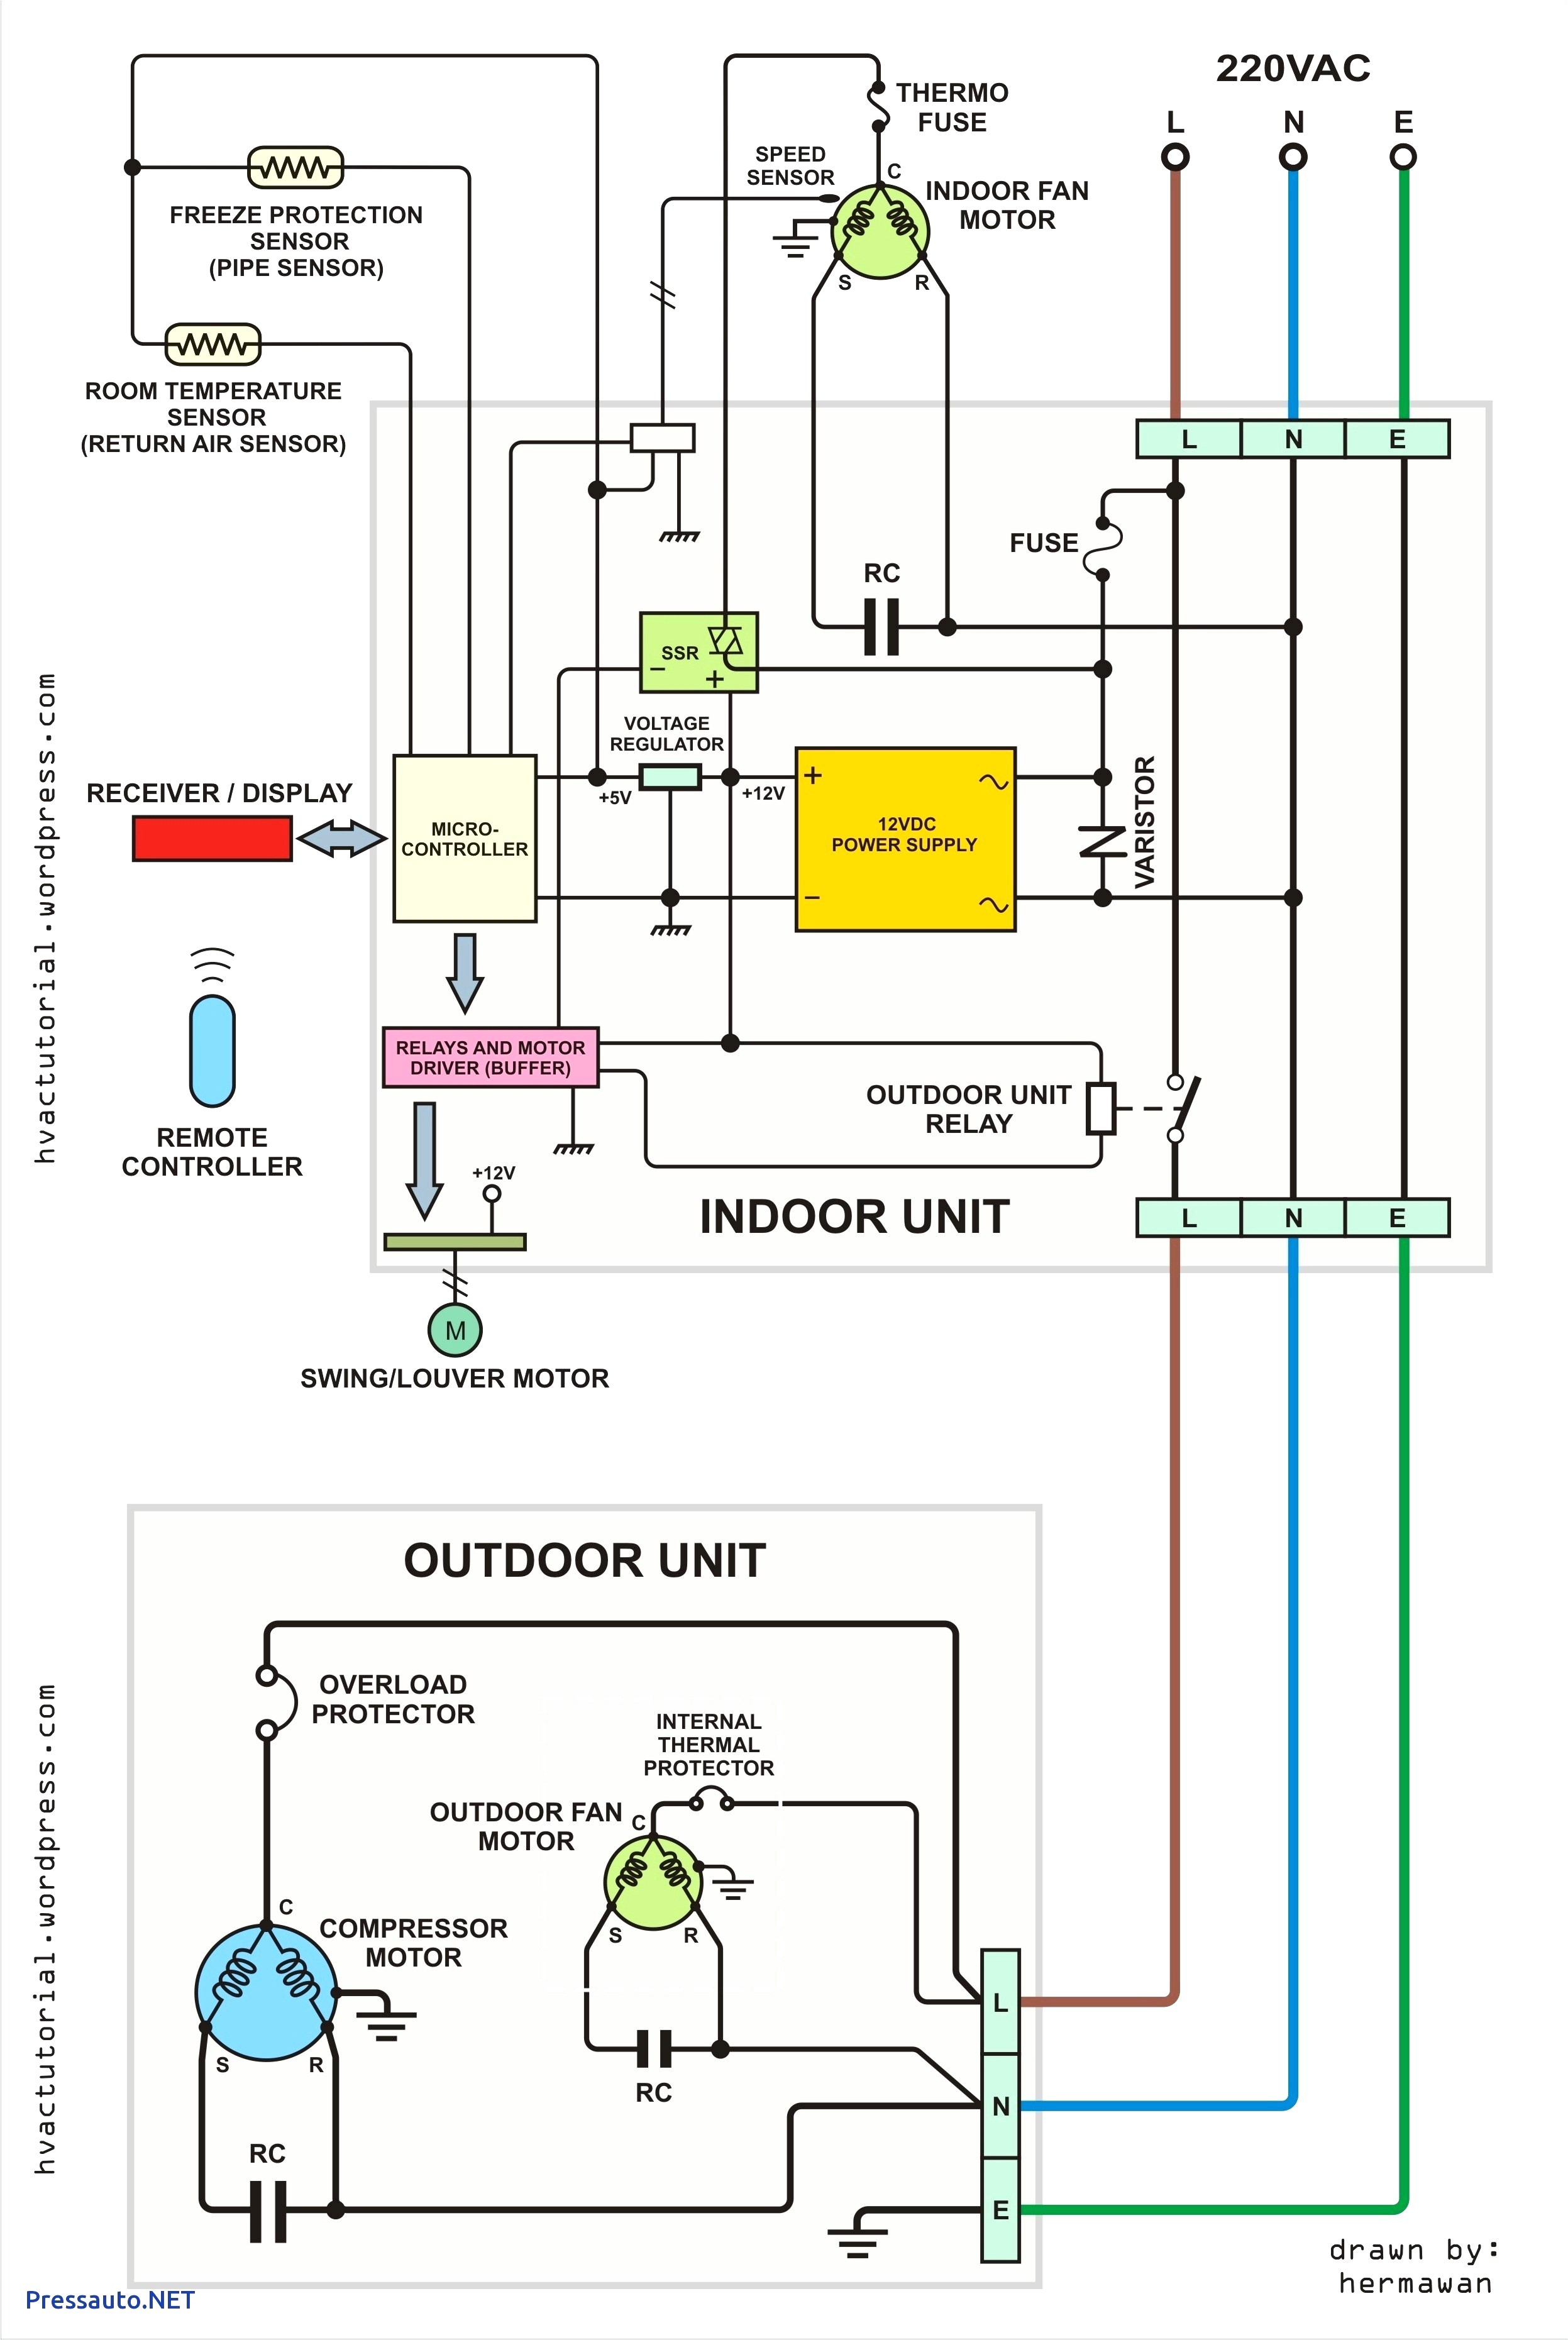 diagram ham wiring qc10escb manual e book ac wiring wiring diagram technic diagram ham wiring qc10escb